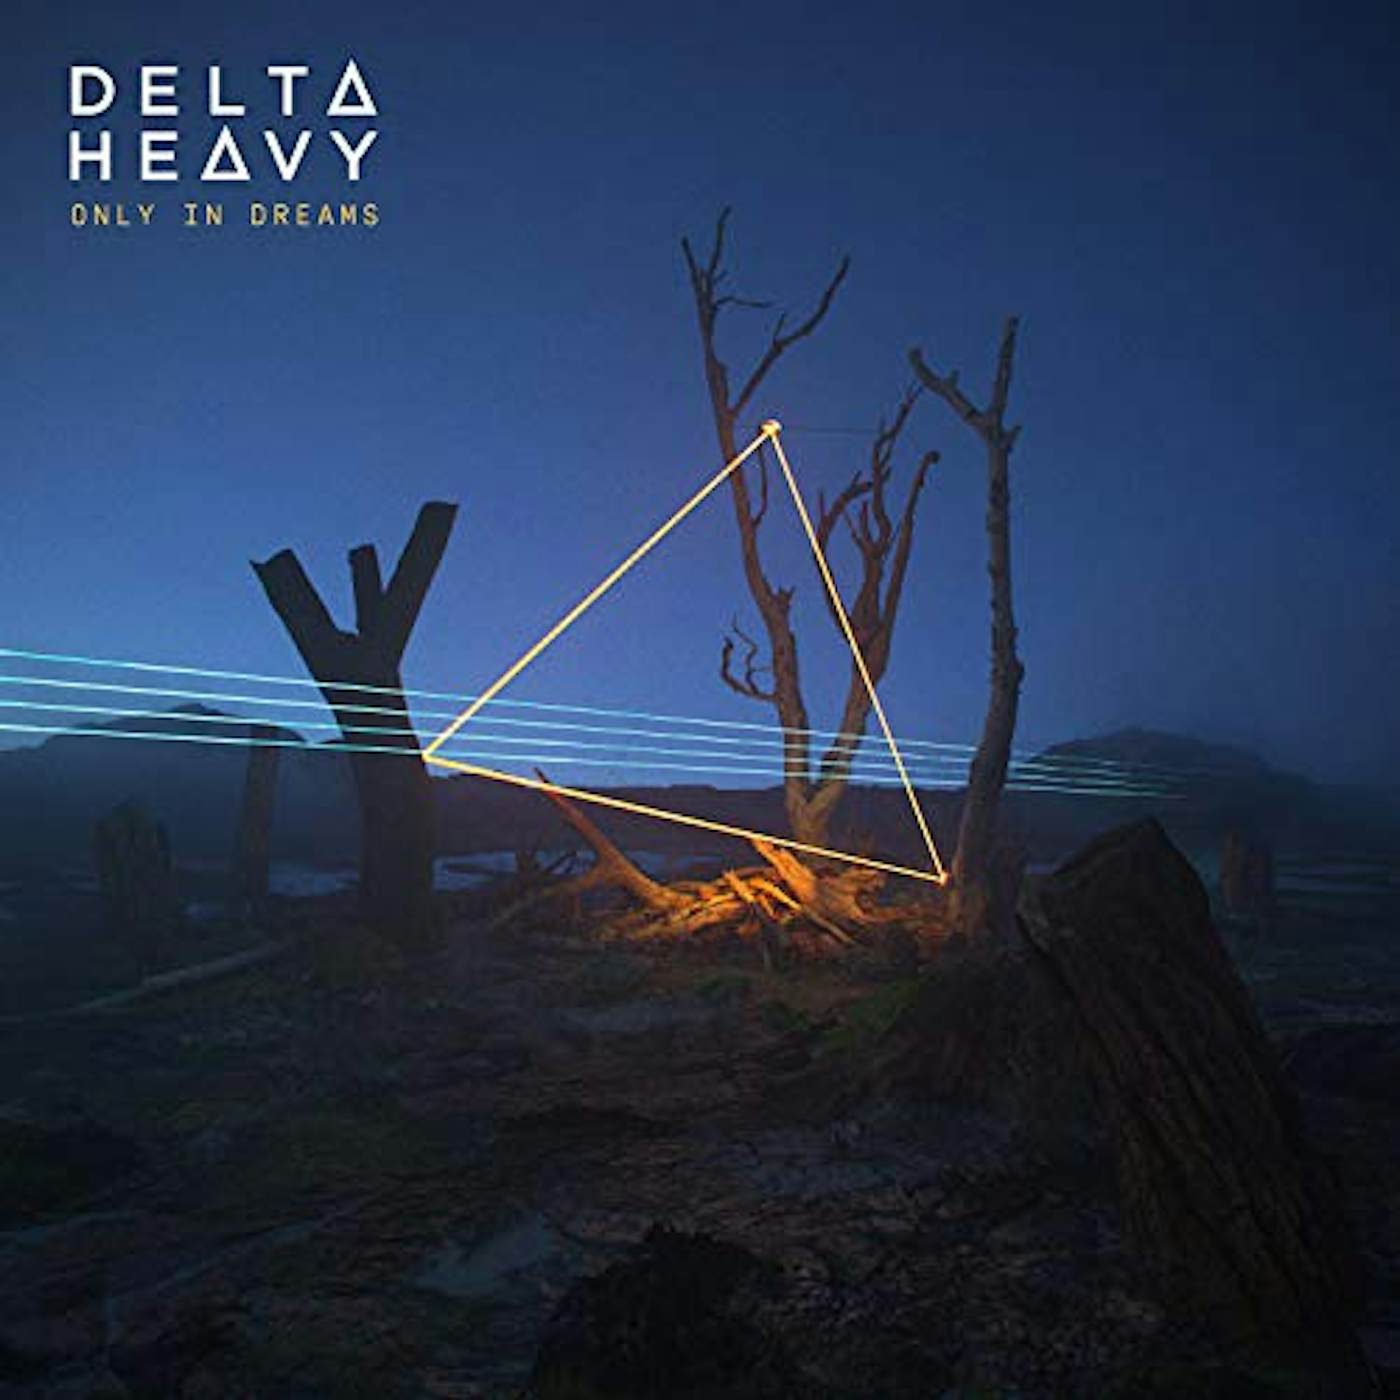 Delta Heavy ONLY IN DREAMS CD